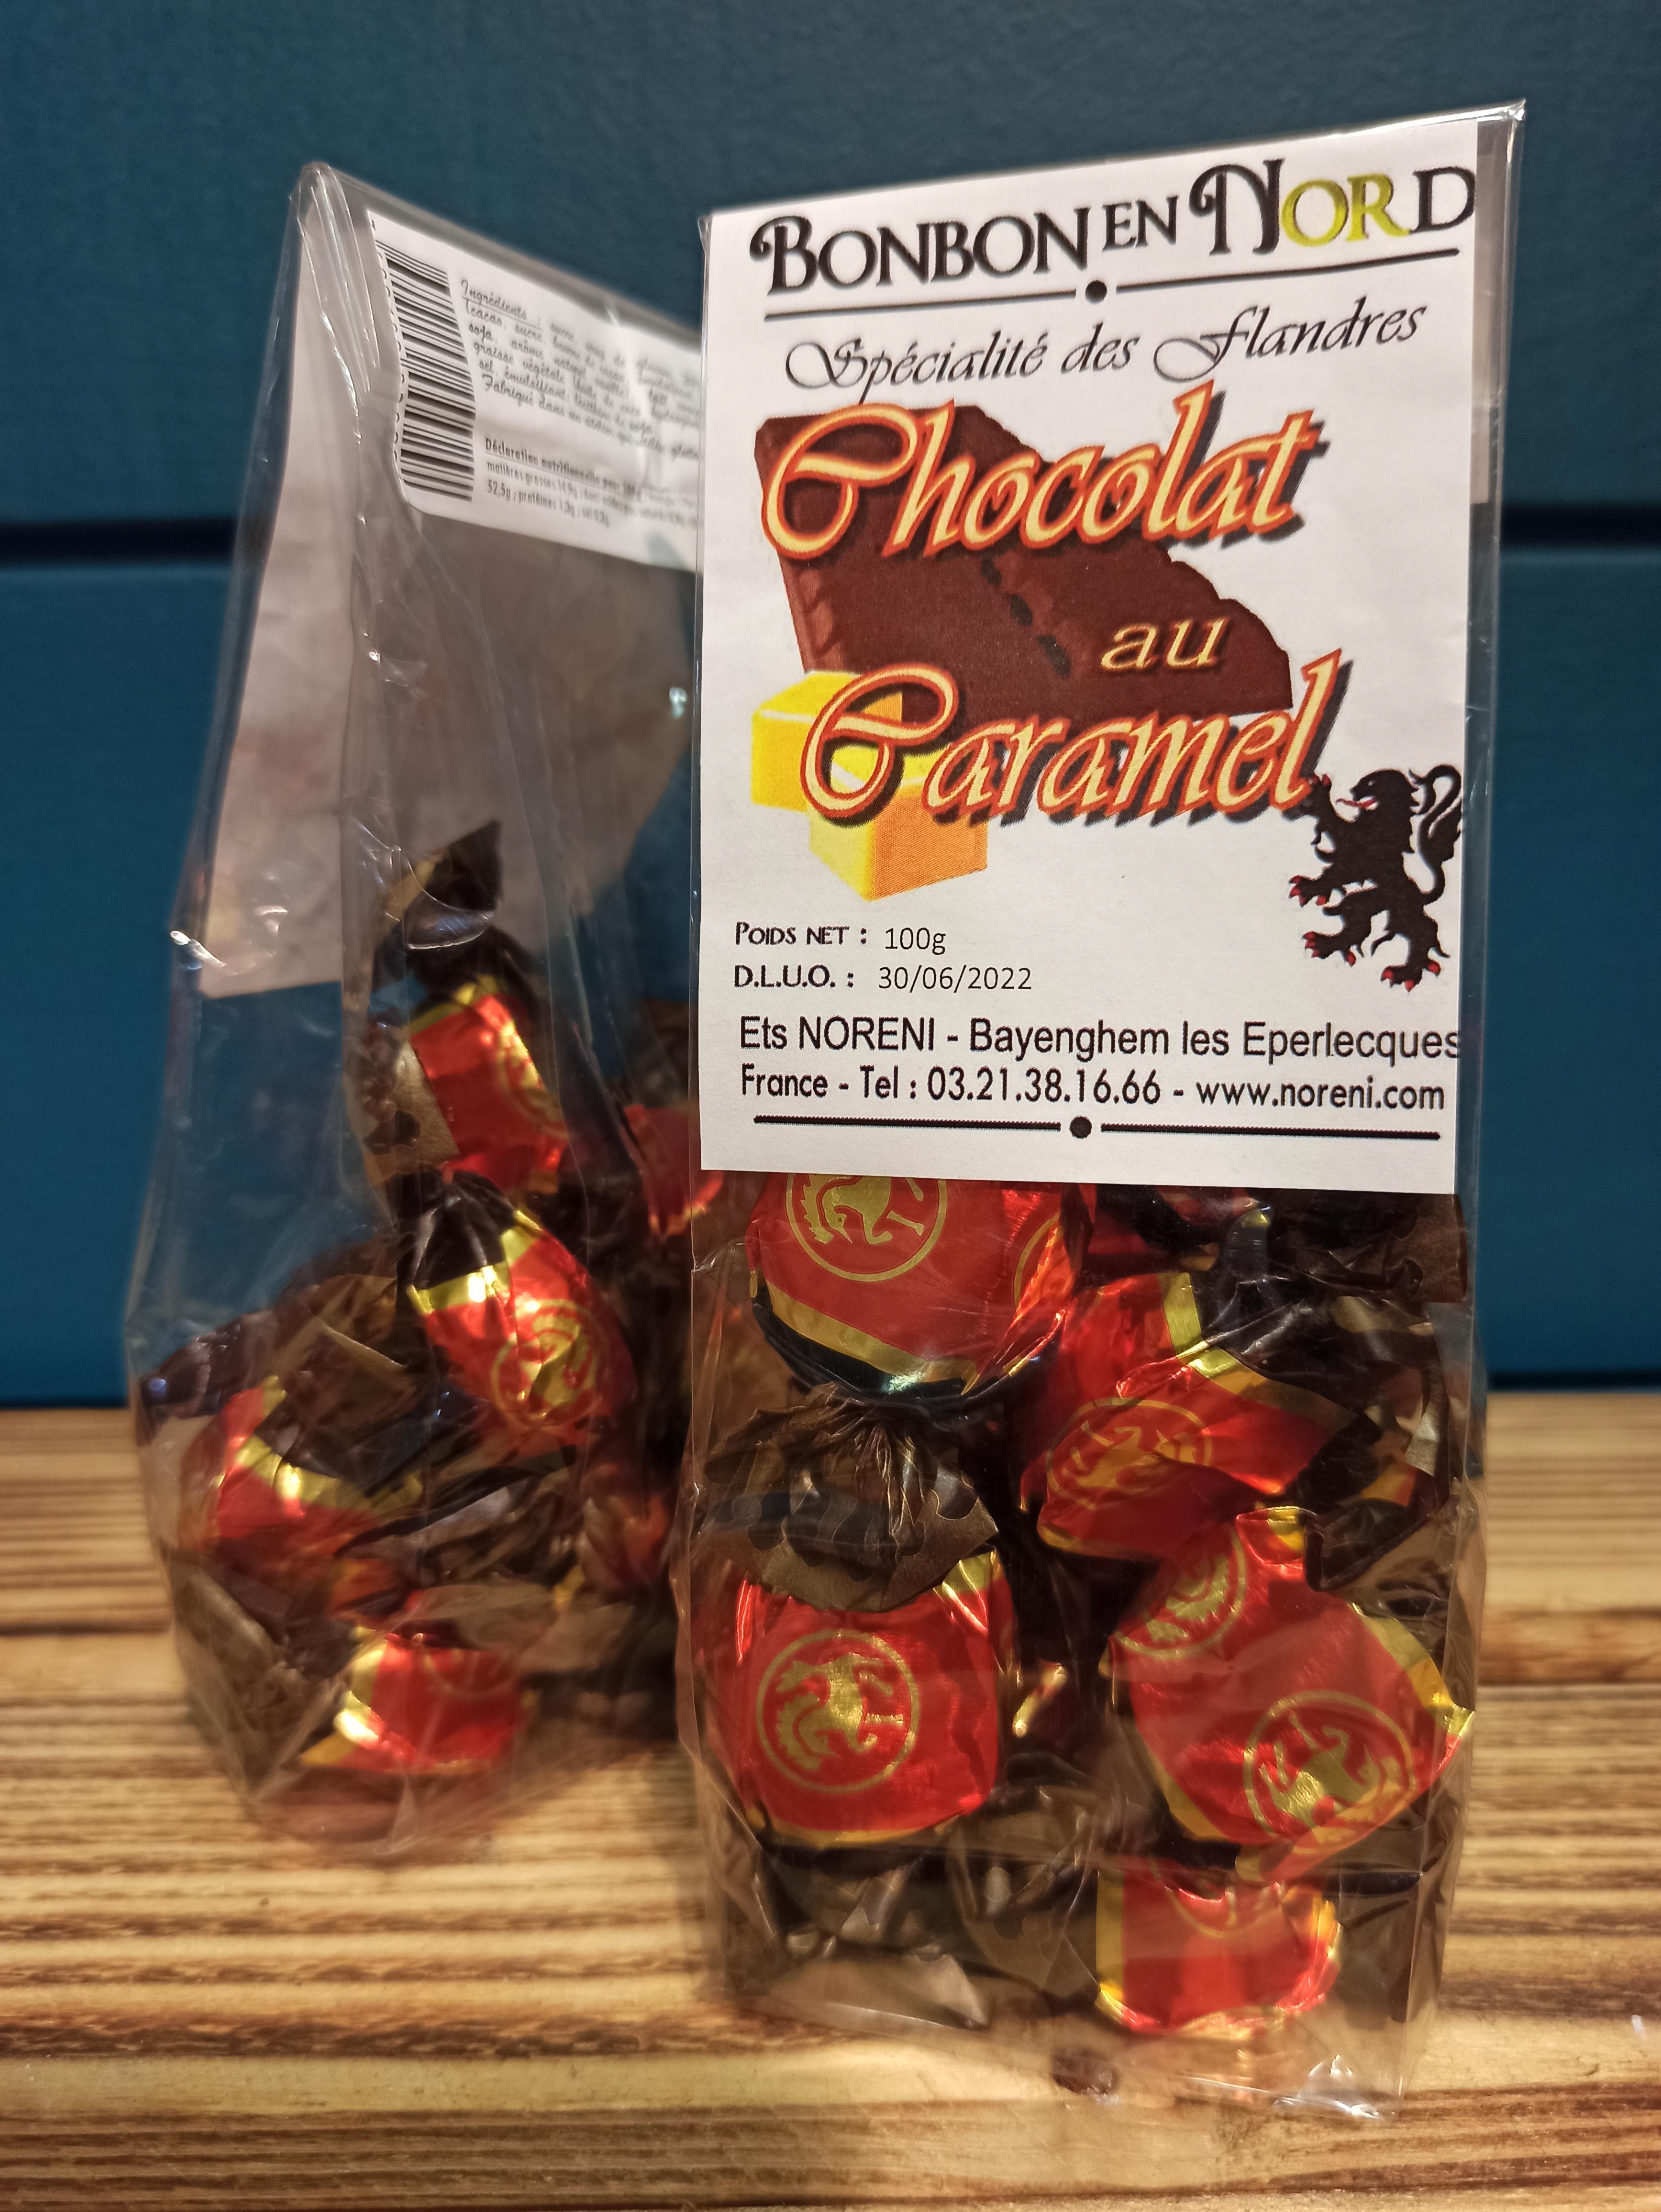 Bonbons caramel enrobés de chocolat - Confiséo - 280 g